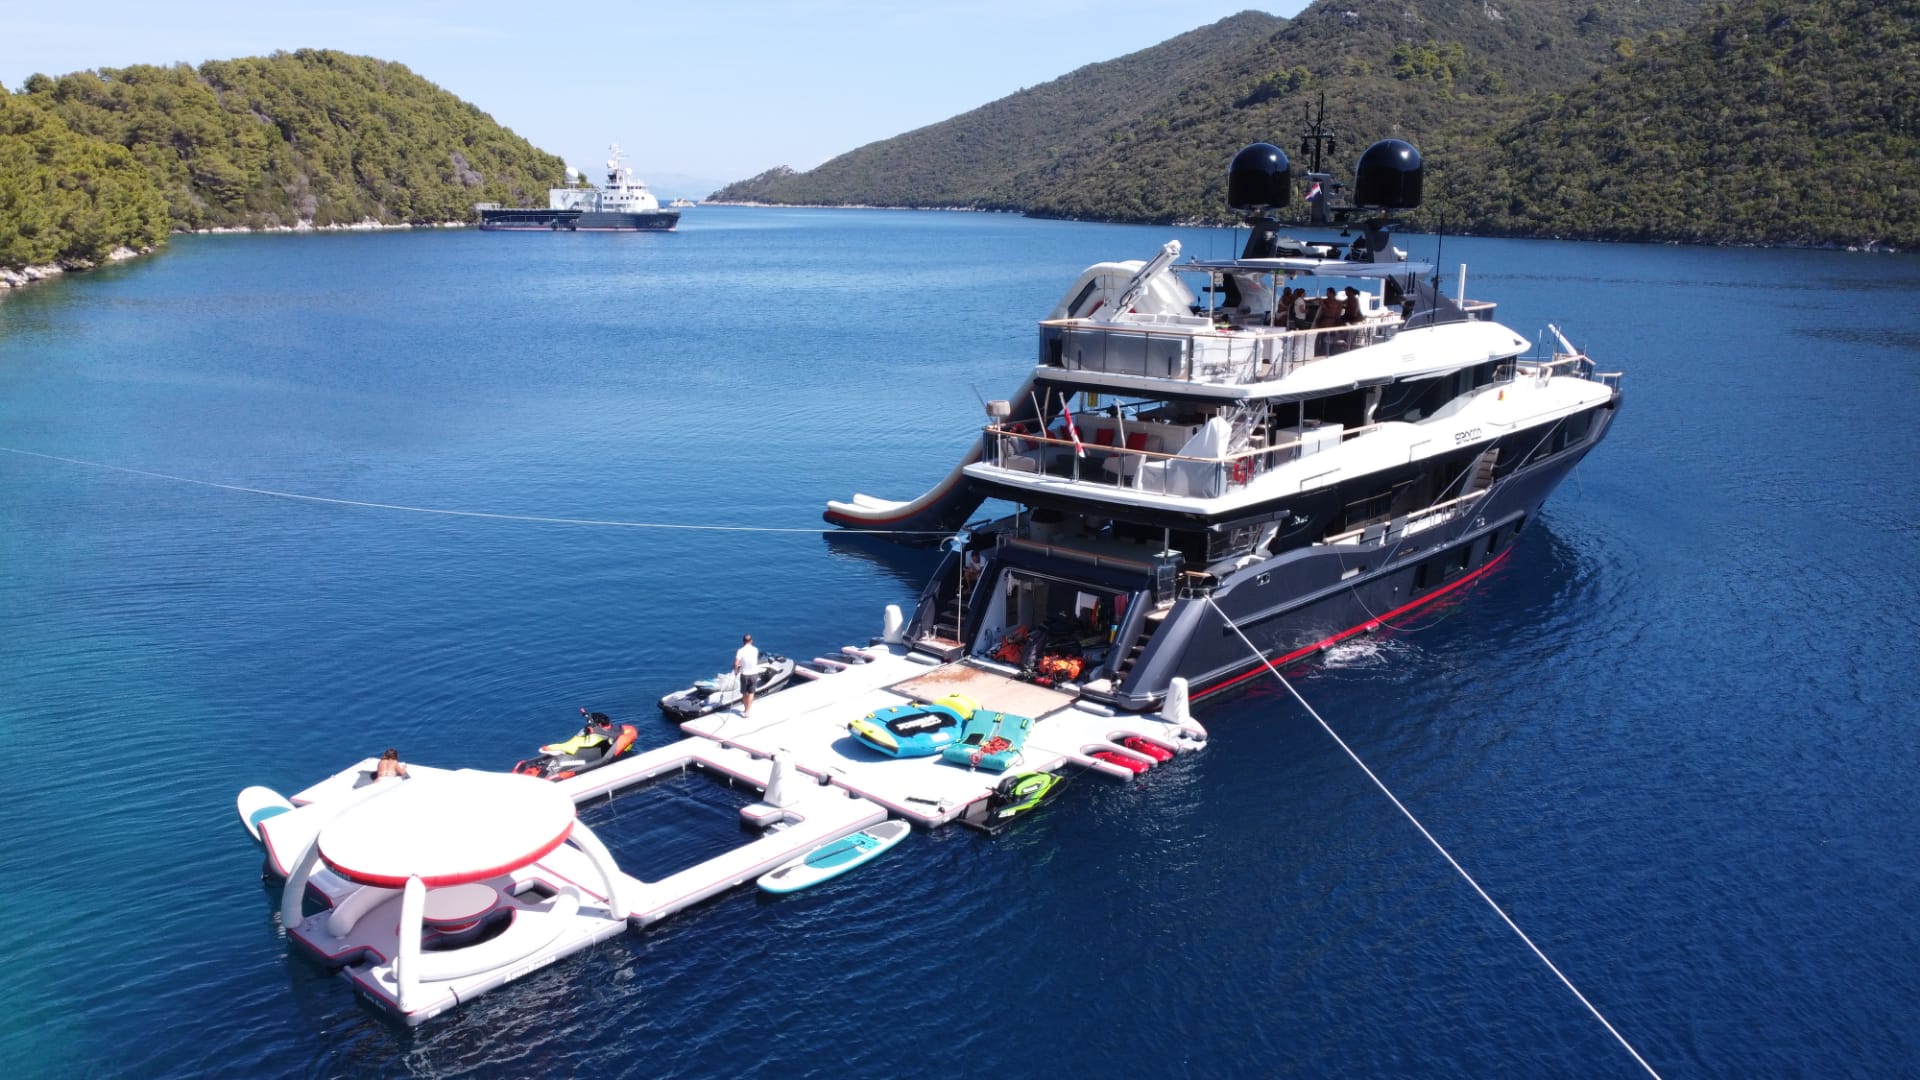 Sirocco Yacht, inflatable superyacht toys